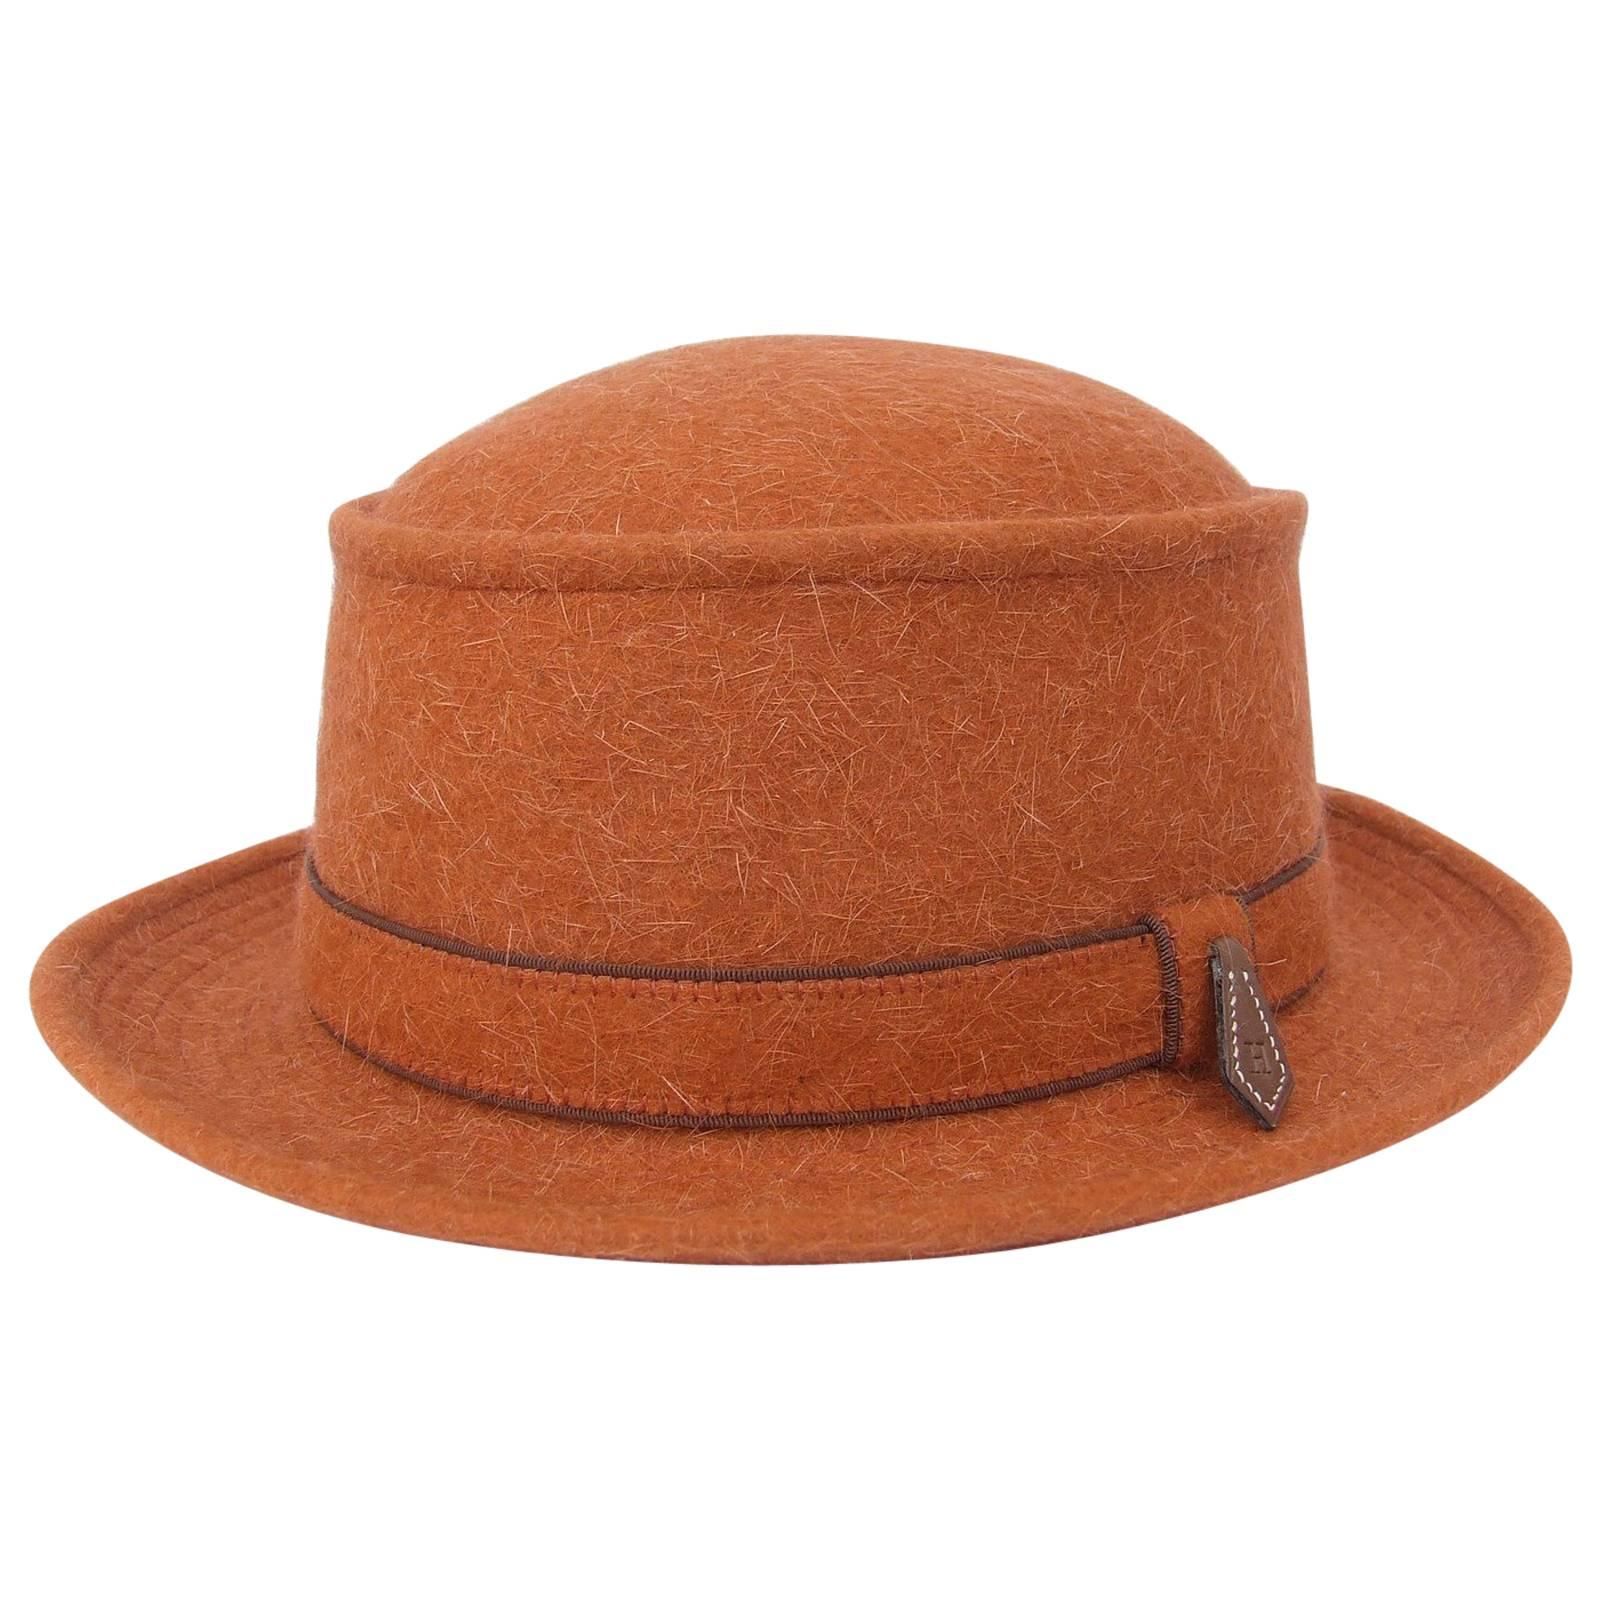 Motsch Paris for Hermes Felt Hat Orange Size 57